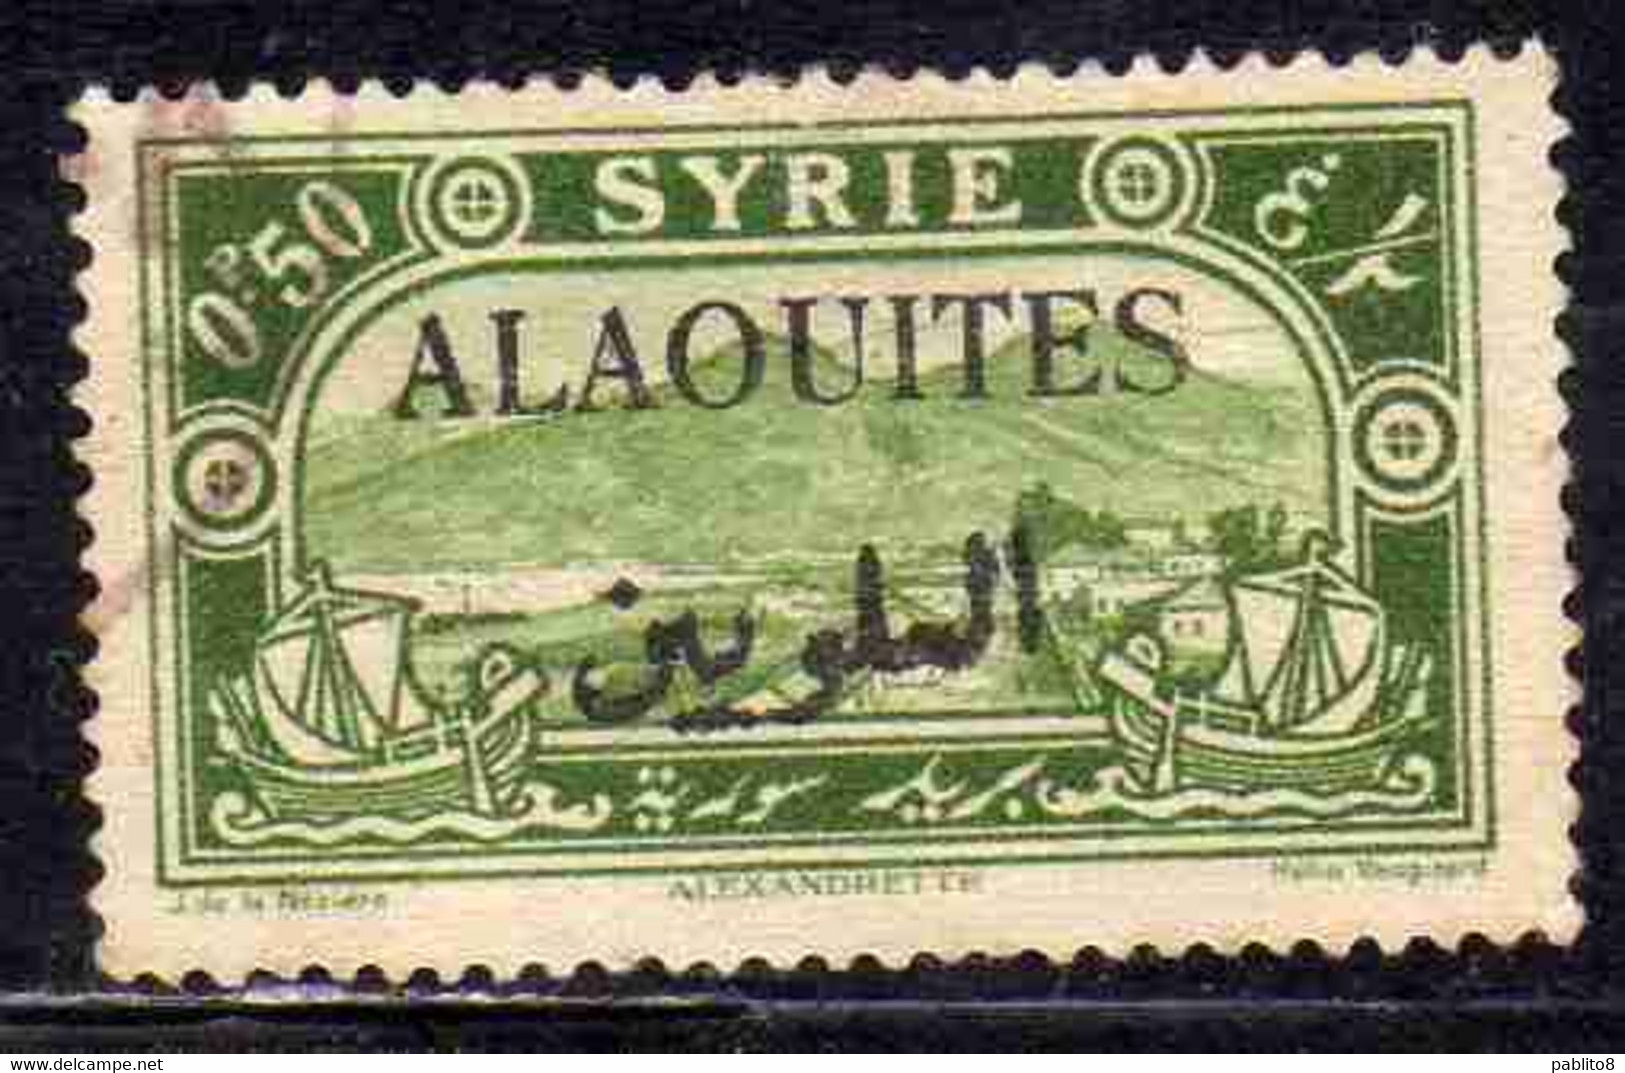 ALAOUITES SYRIA SIRIA ALAQUITES 1925 VIEW OF ALEXANDRETTA 50c USED USATO OBLITERE' - Used Stamps